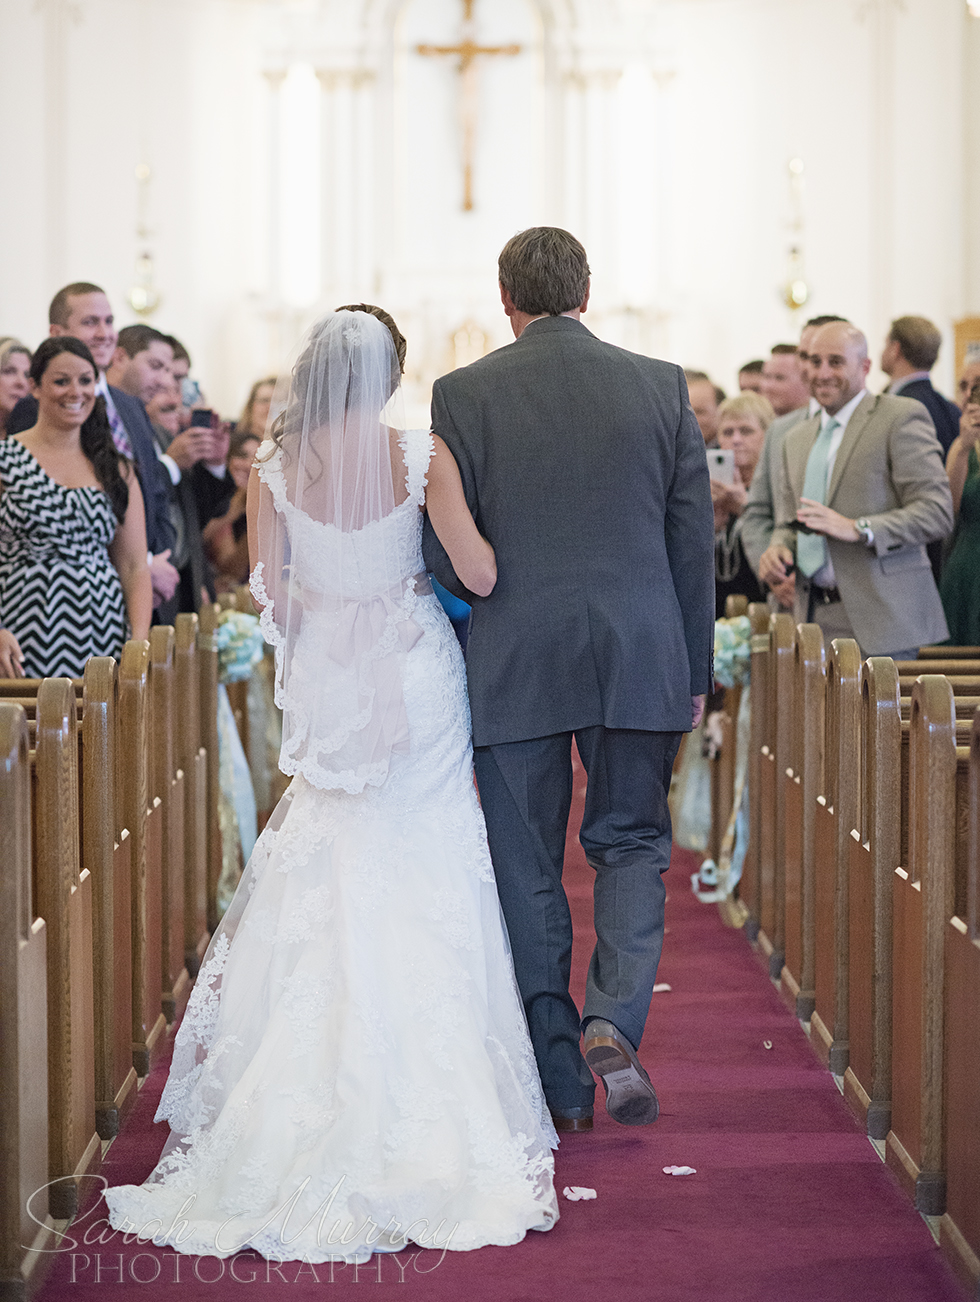 Jesus Savior Church Wedding in Newport, Rhode Island - Sarah Murray Photography